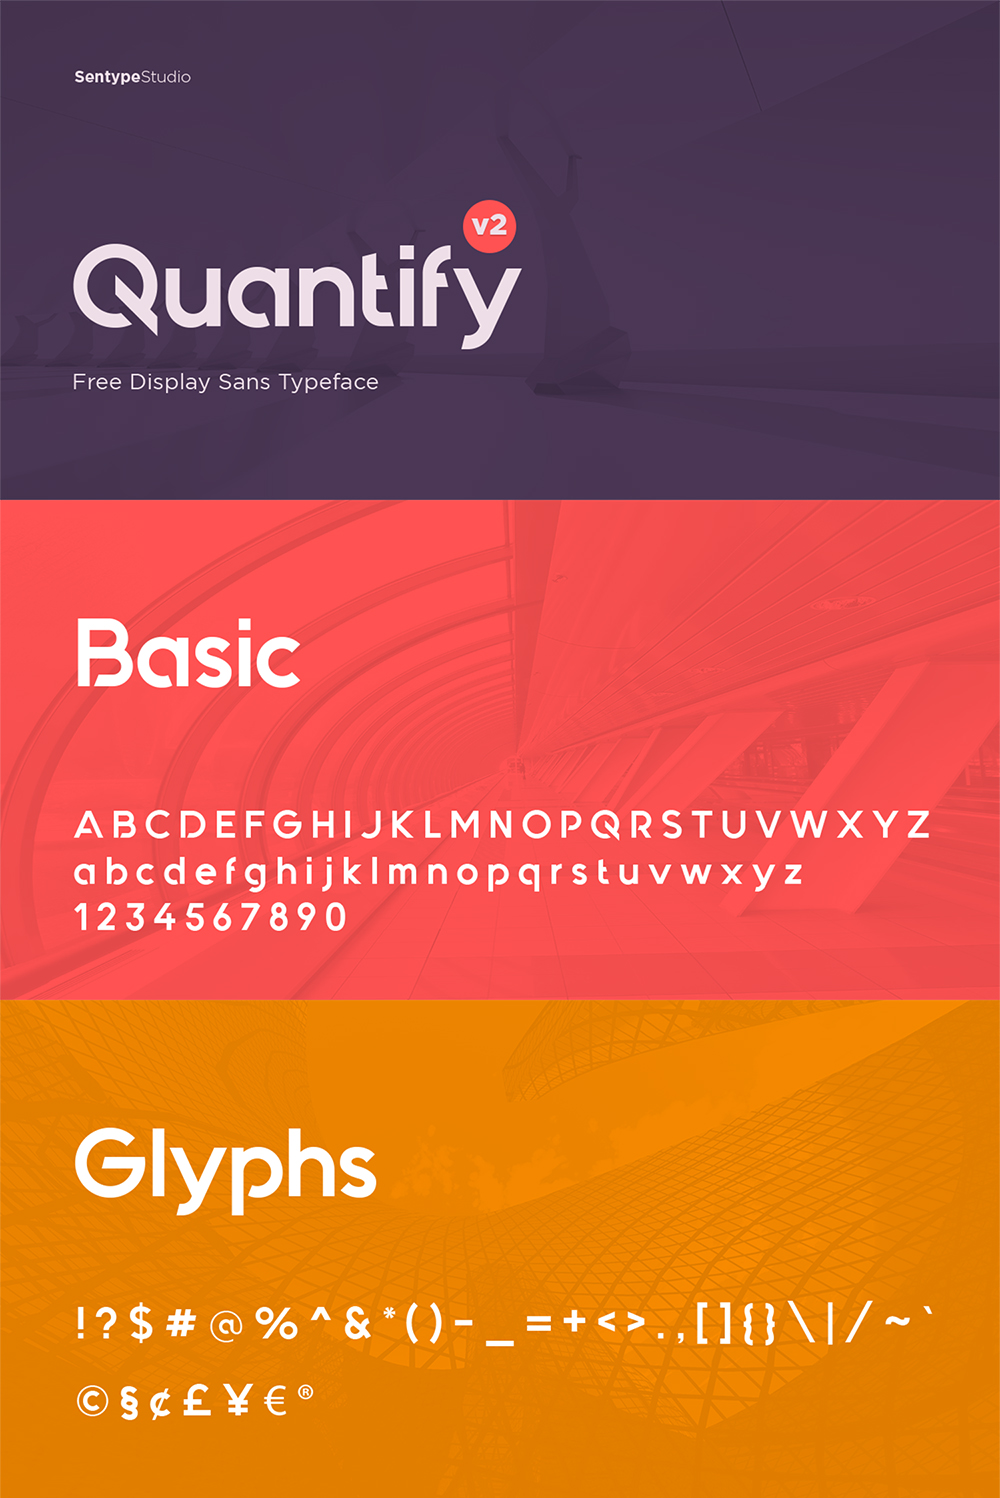 Quantify Sans V2 Free Typeface